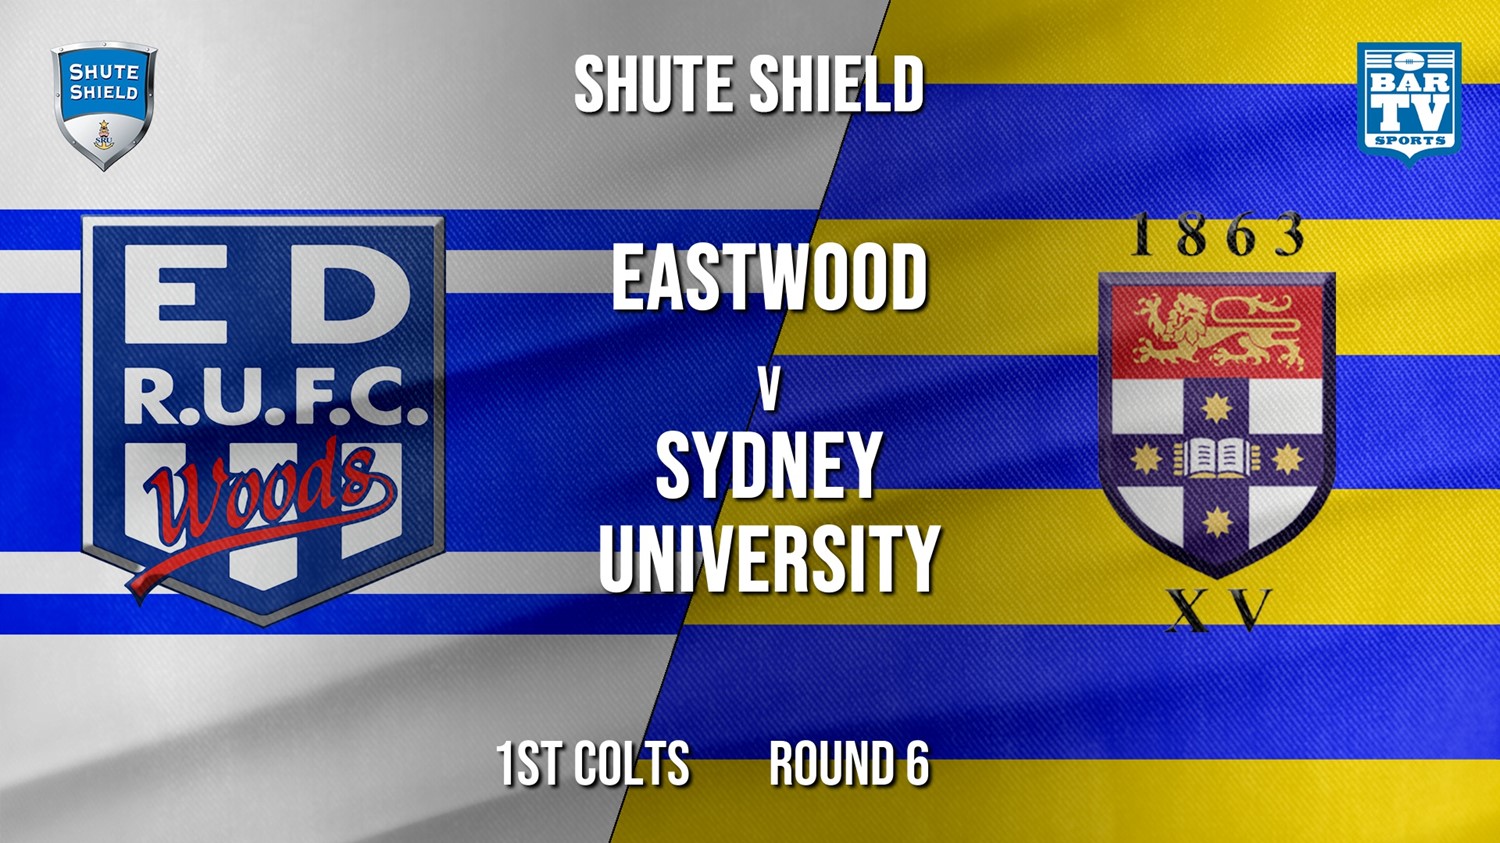 Shute Shield Round 6 - 1st Colts - Eastwood v Sydney University Minigame Slate Image